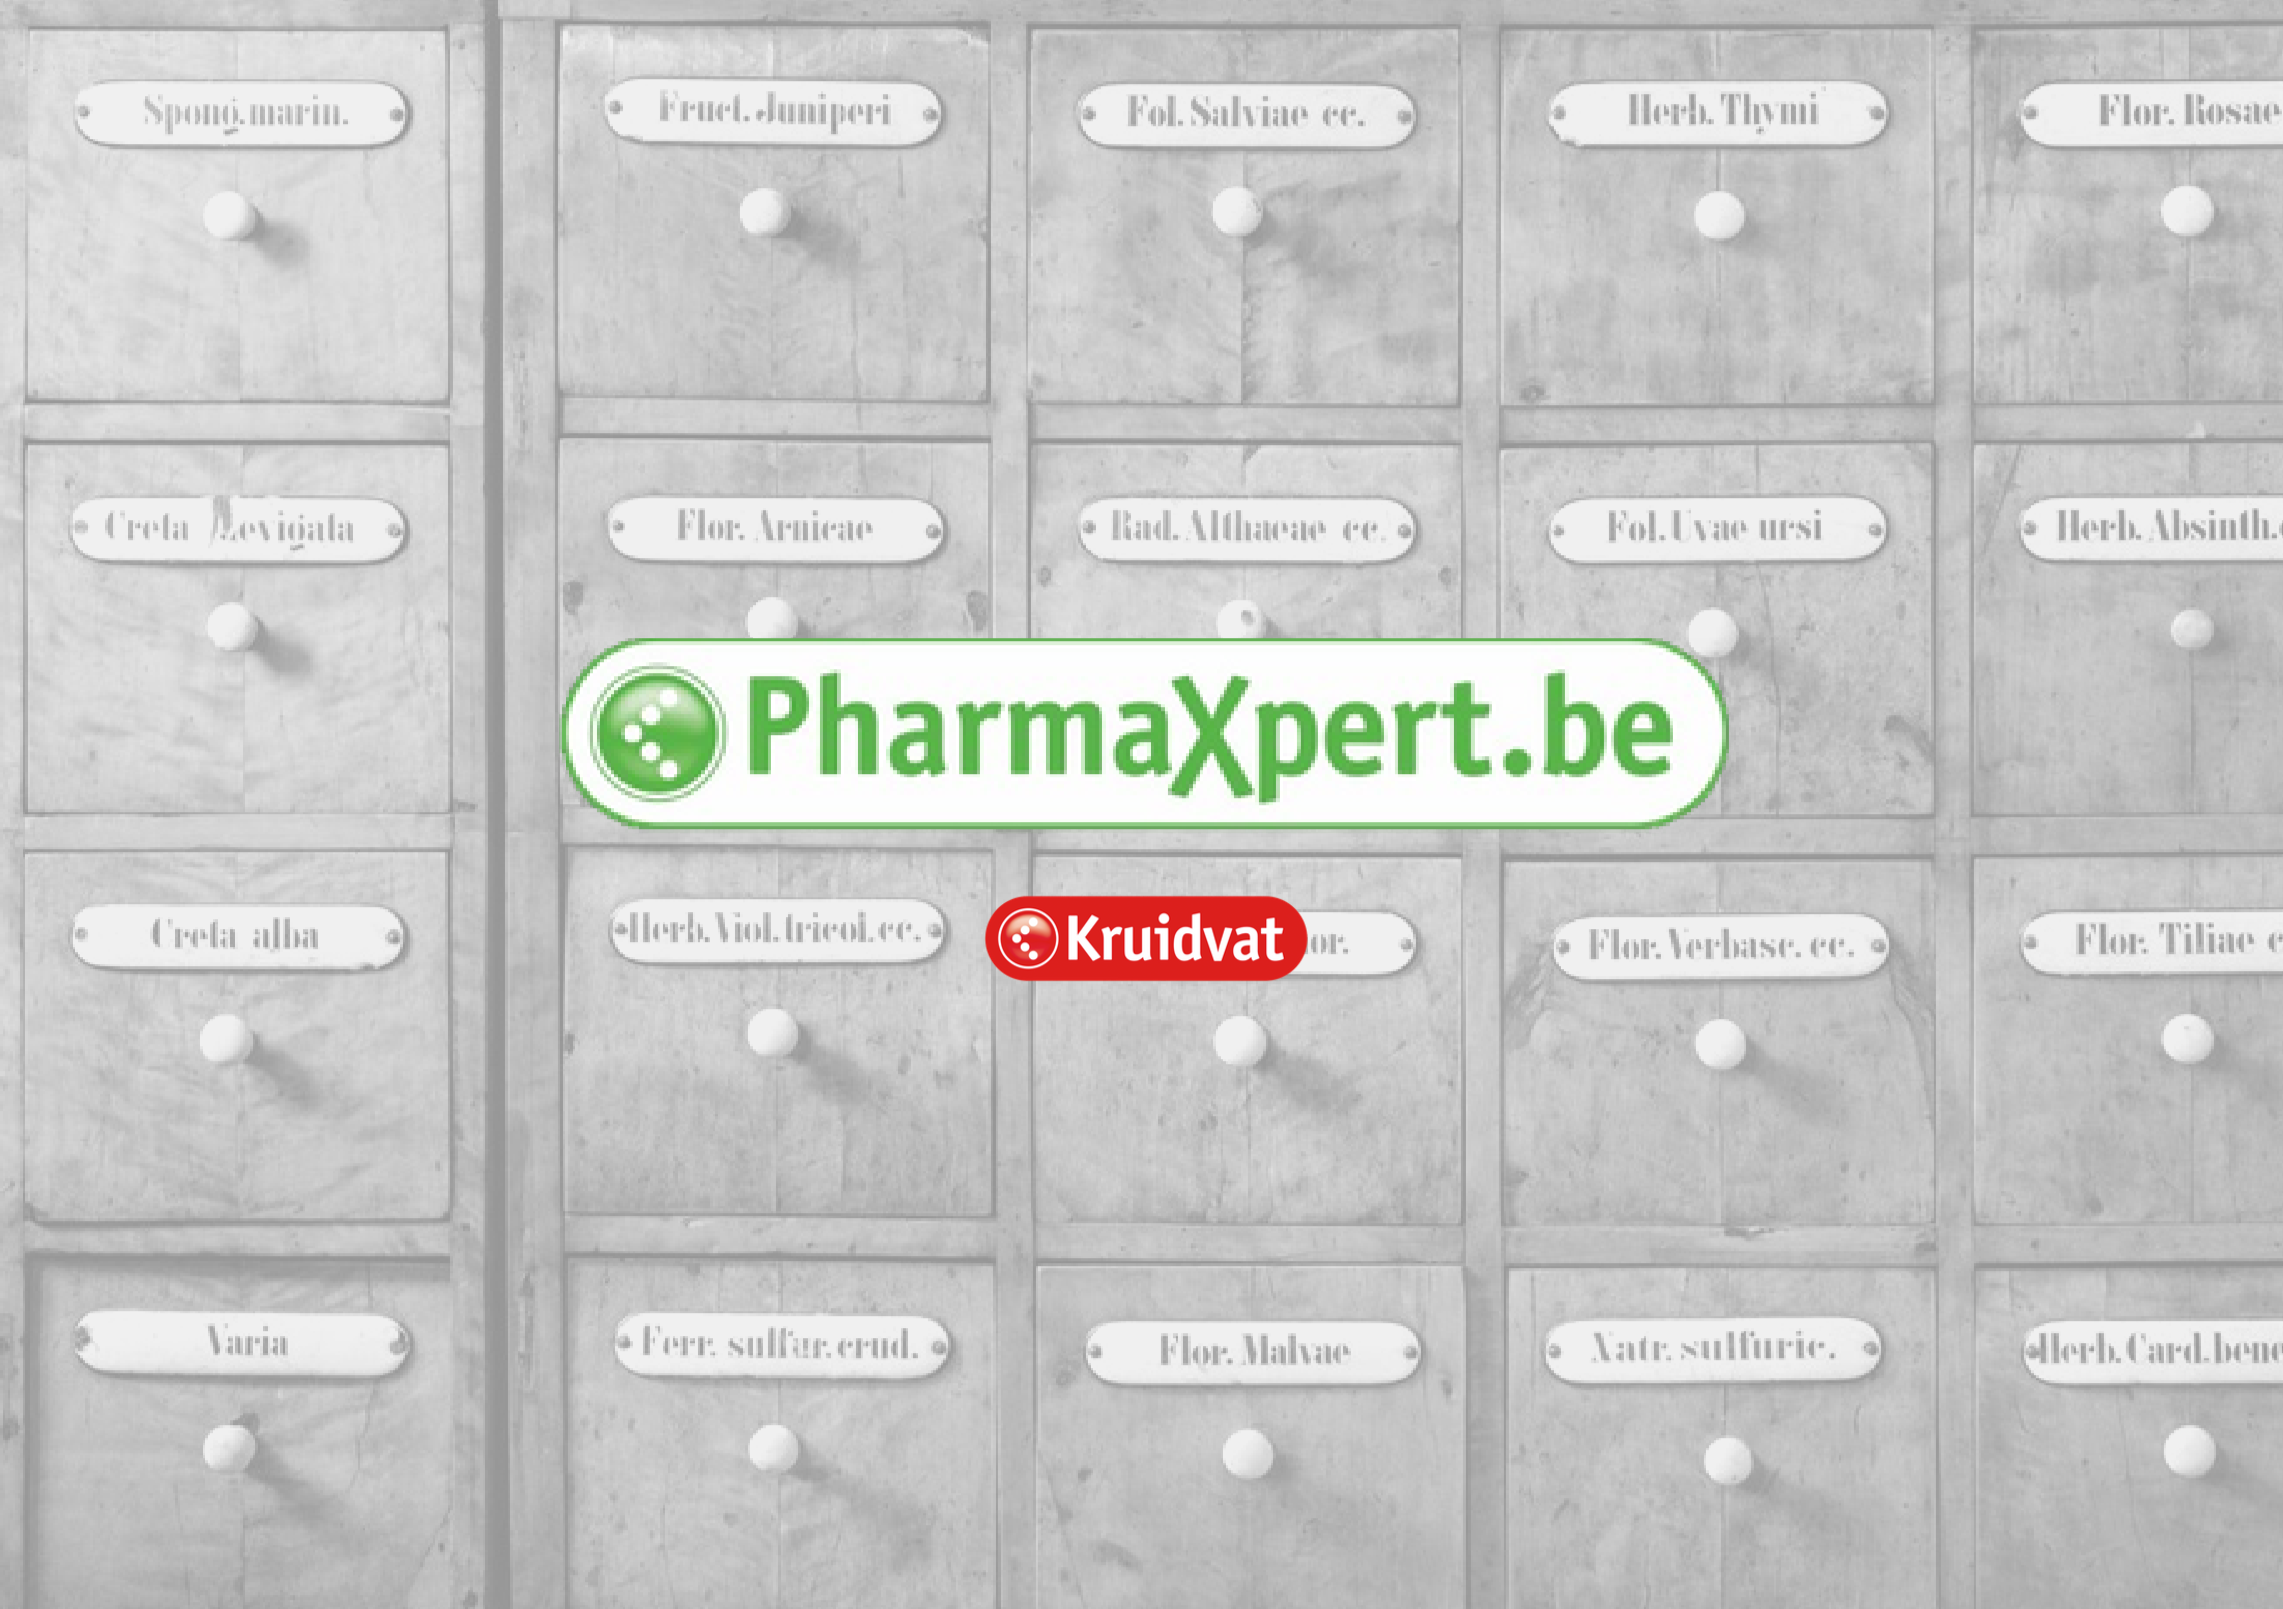 PharmaXpert - A brand new online pharmacy by Kruidvat